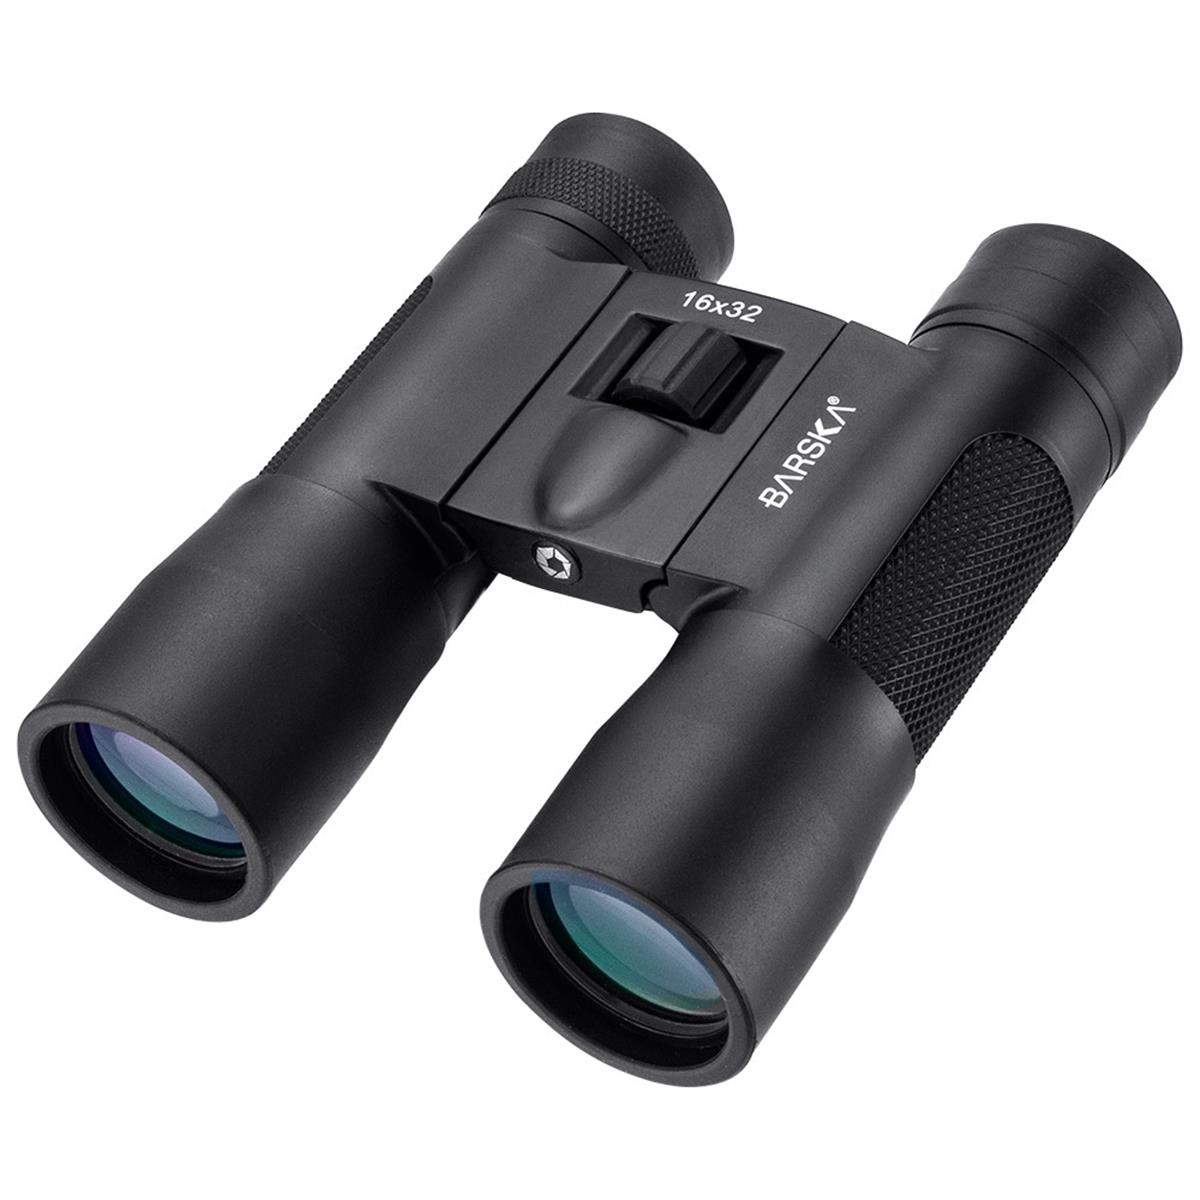 Picture of Barska AB13345 16 x 32 mm Lucid View Compact Binoculars, Black Matte